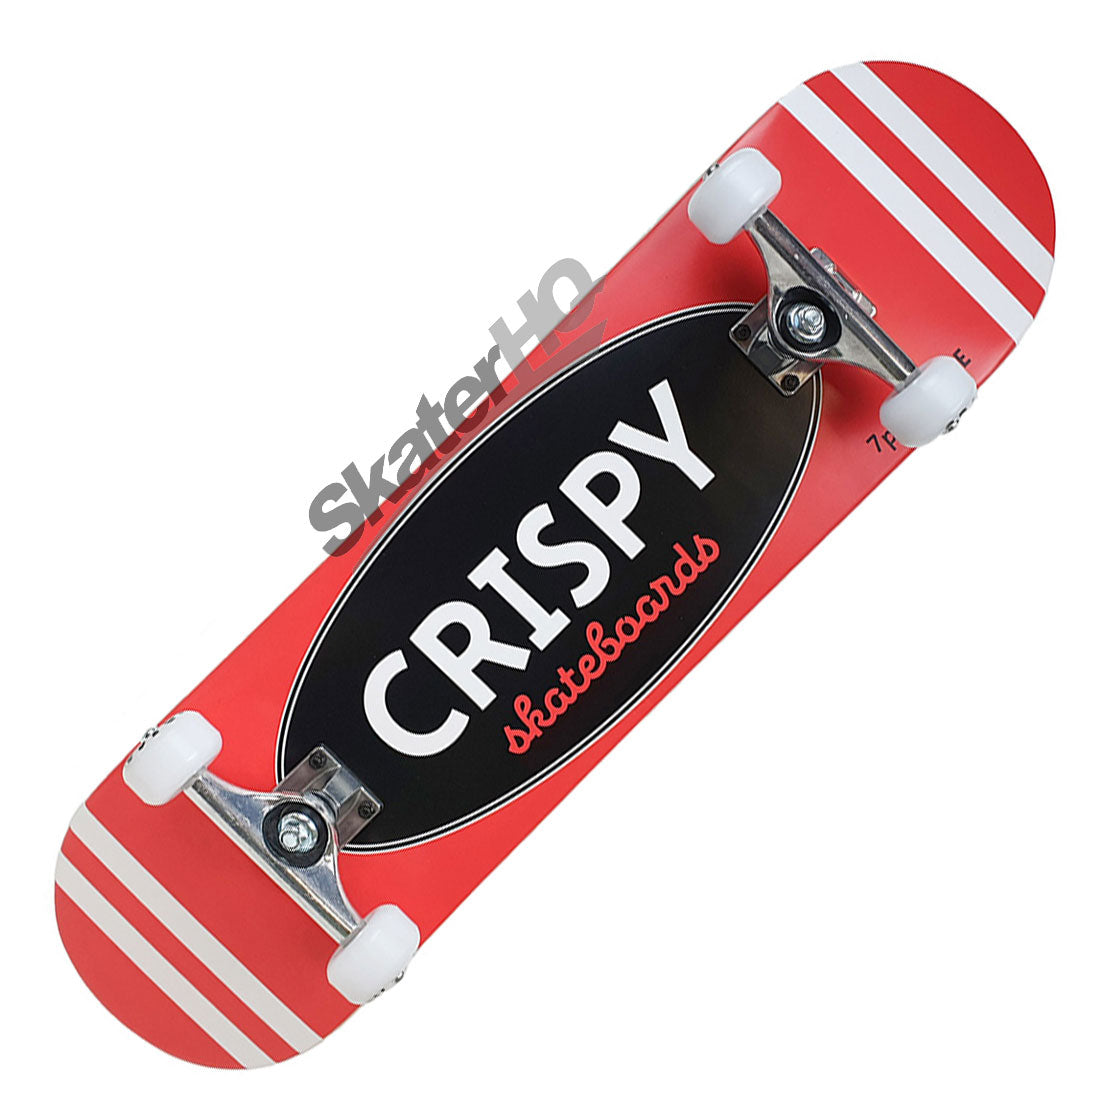 Crispy Rookie Stripes 8.25 Complete - Red Skateboard Completes Modern Street